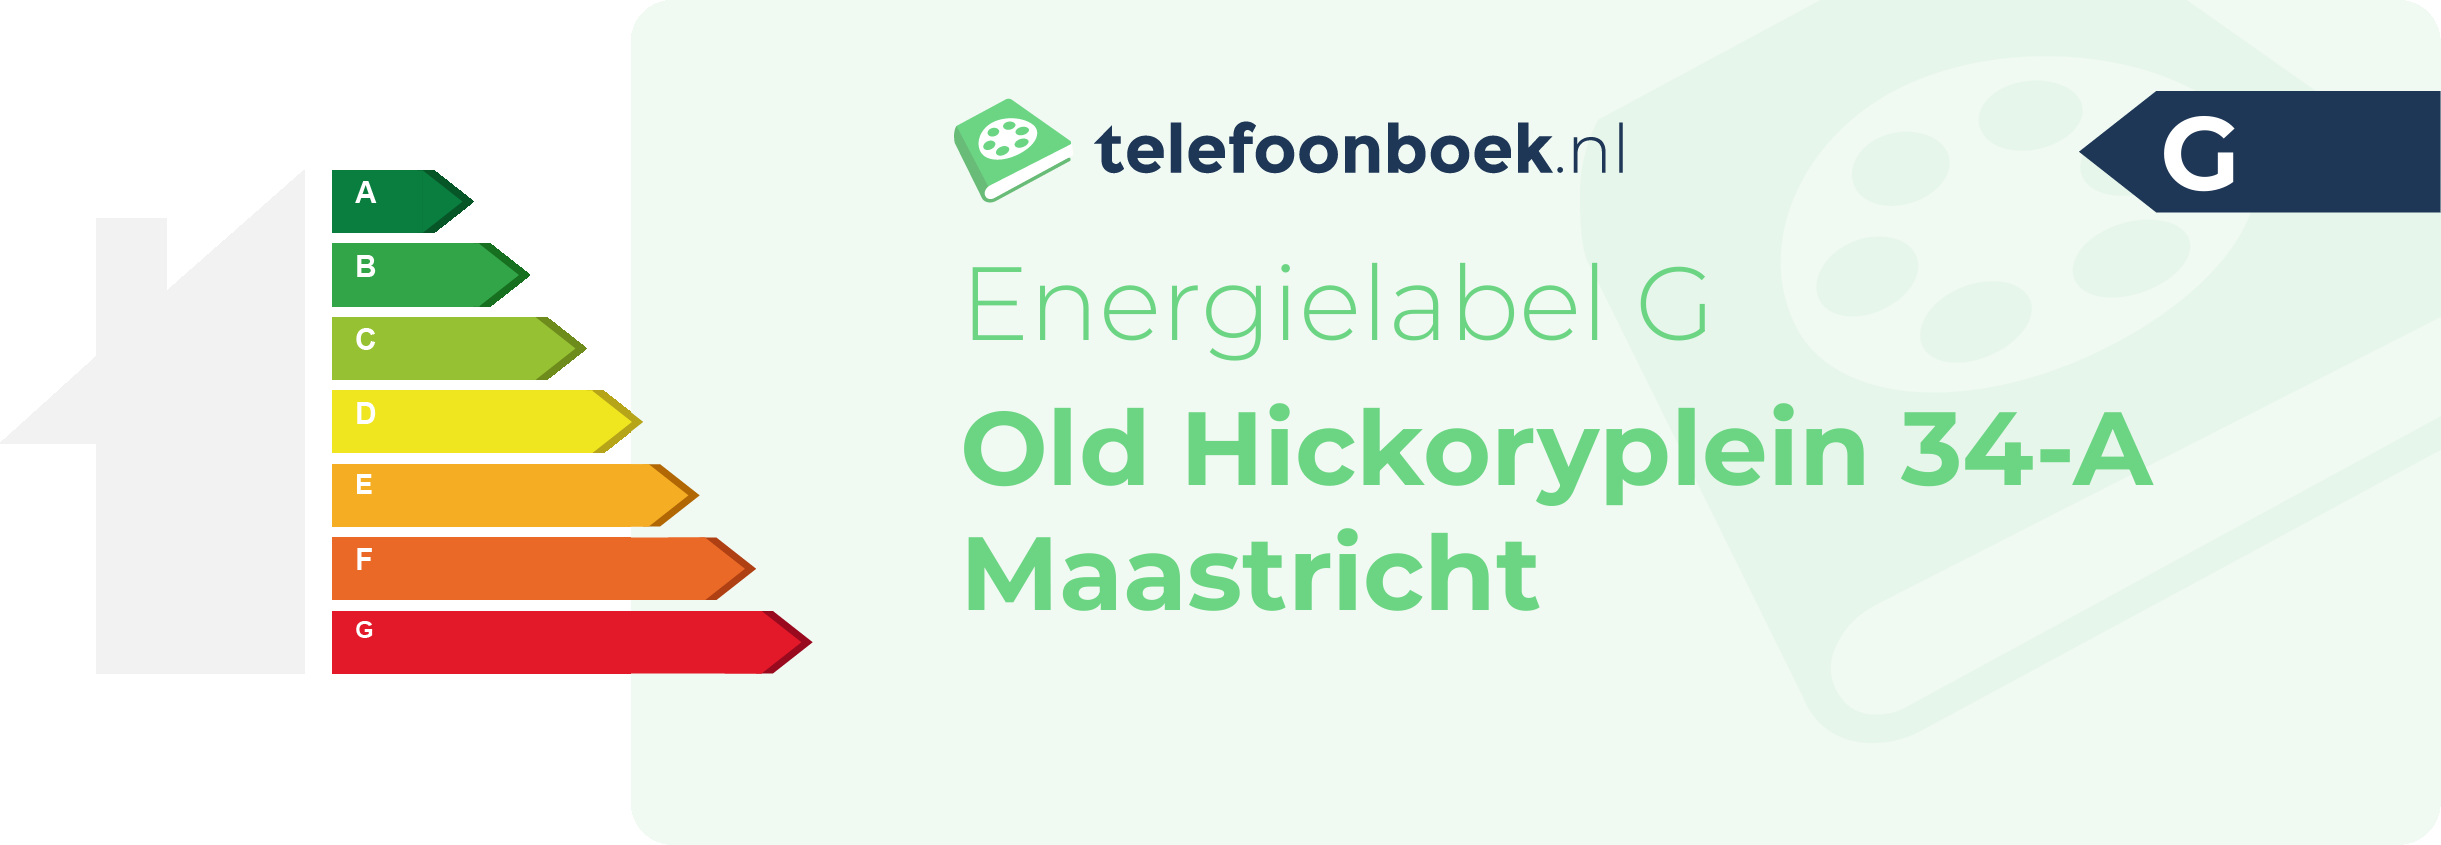 Energielabel Old Hickoryplein 34-A Maastricht